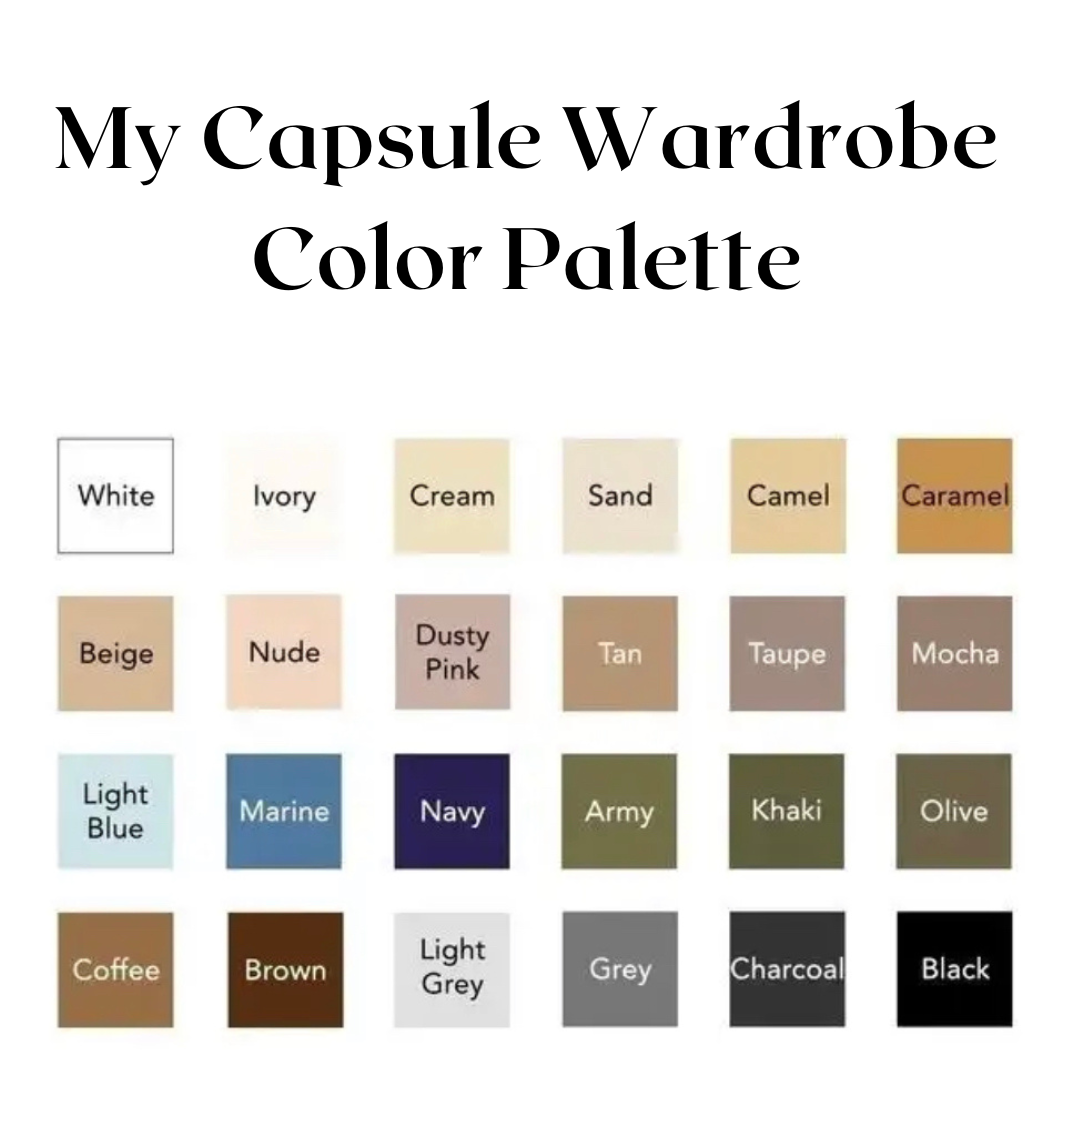 My capsule wardrobe color palette